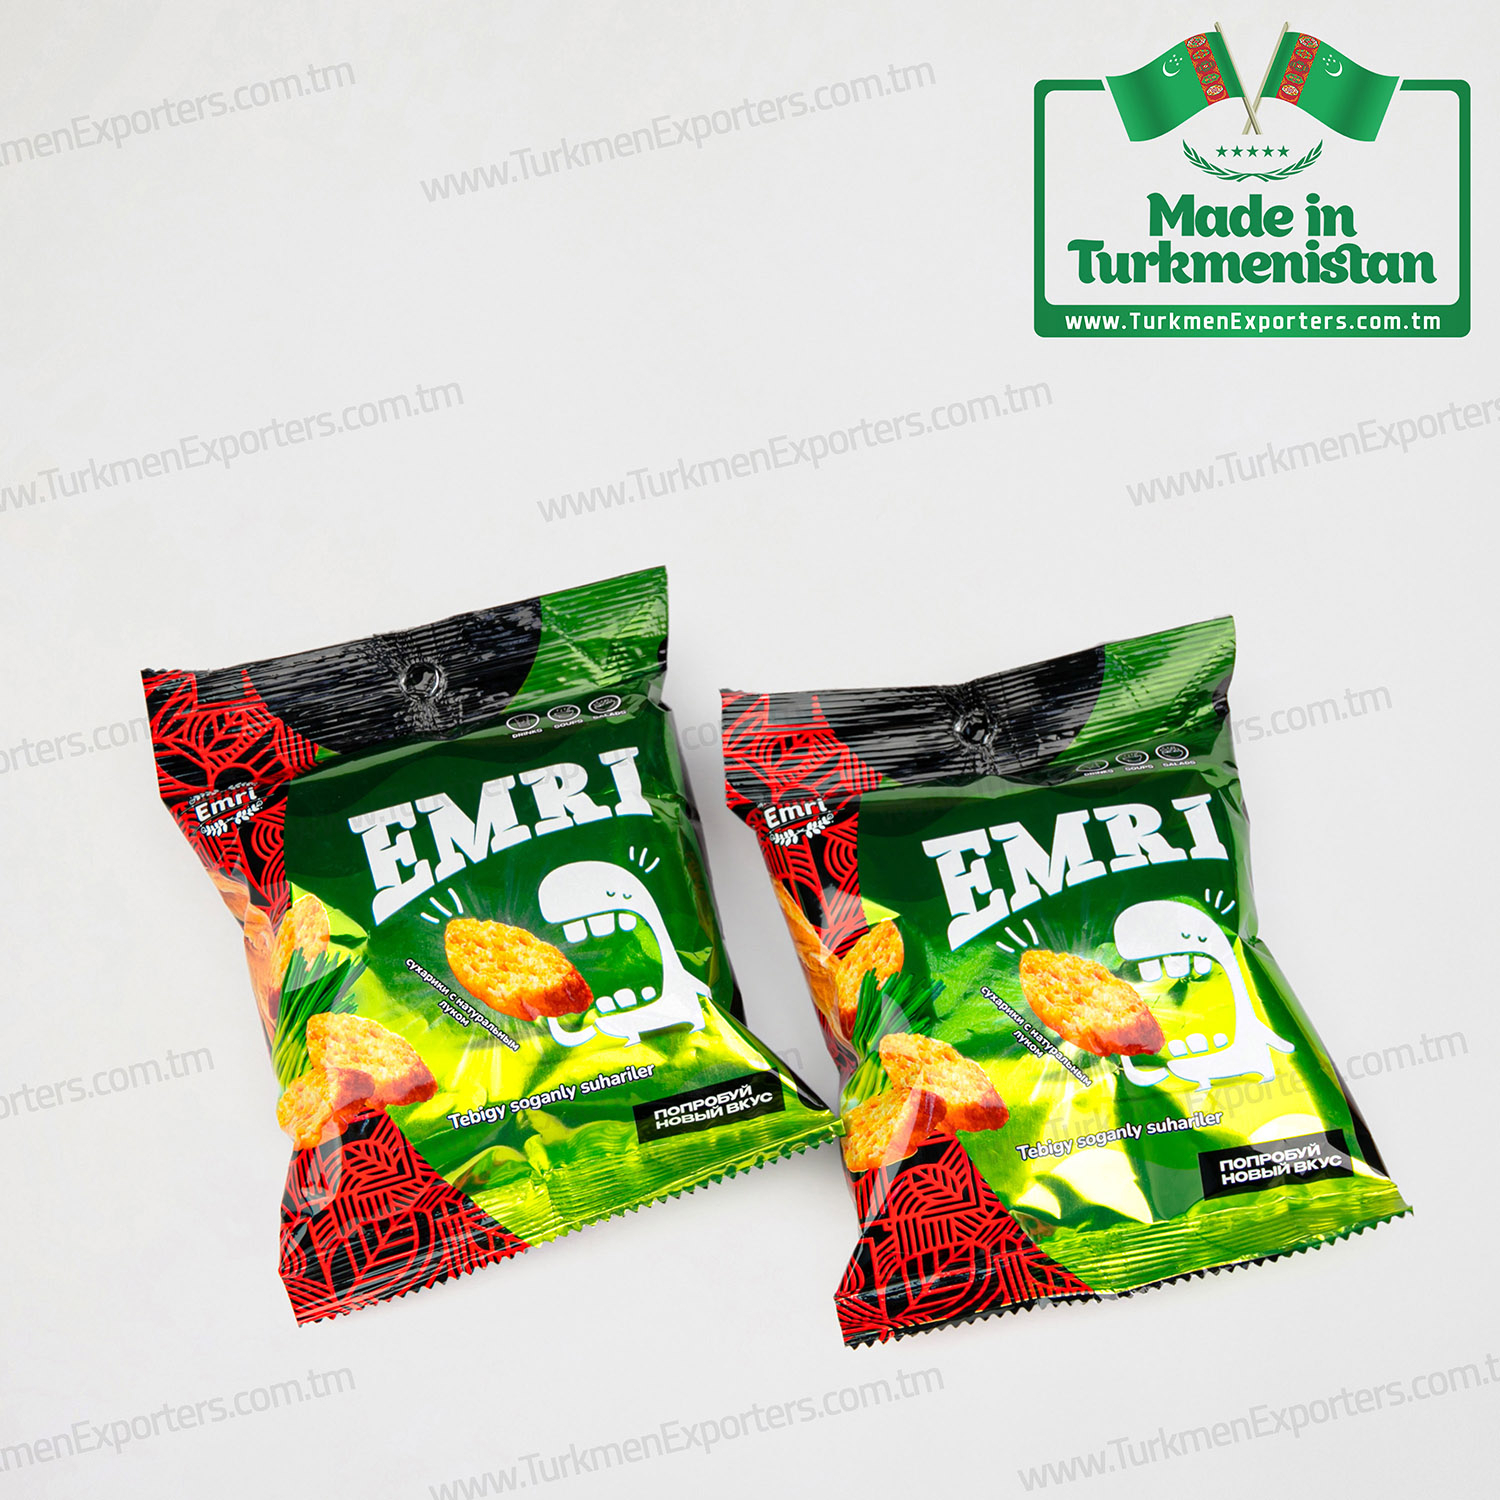 Crackers wholesale from Turkmenistan | Esasy Sebap individual enterprise